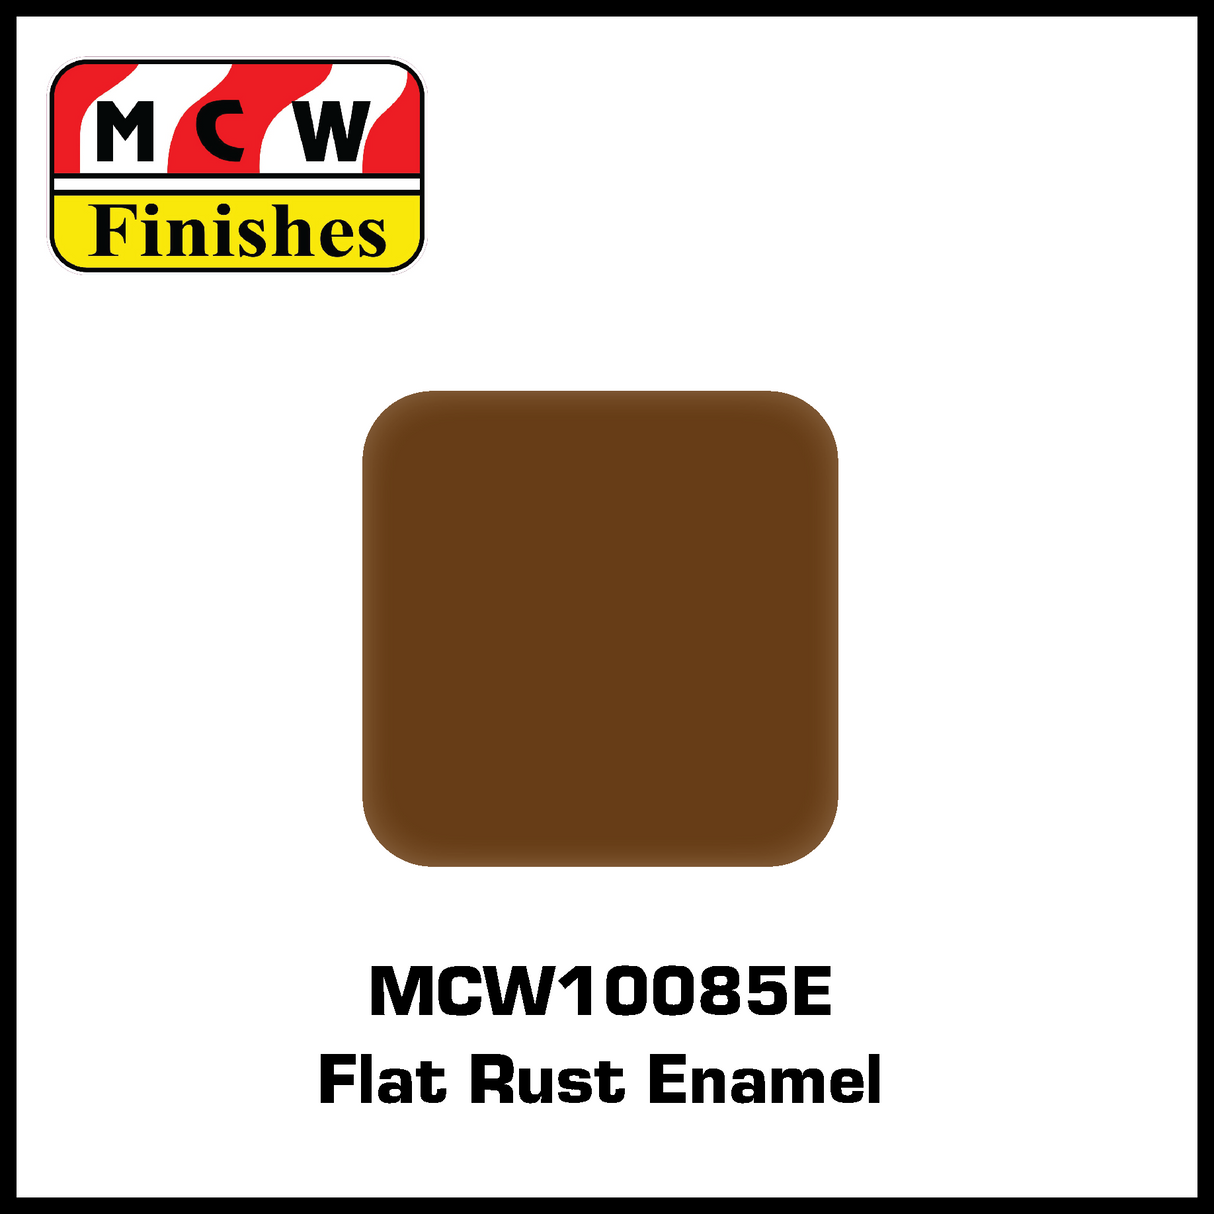 MCW Finishes Flat Rust Enamel